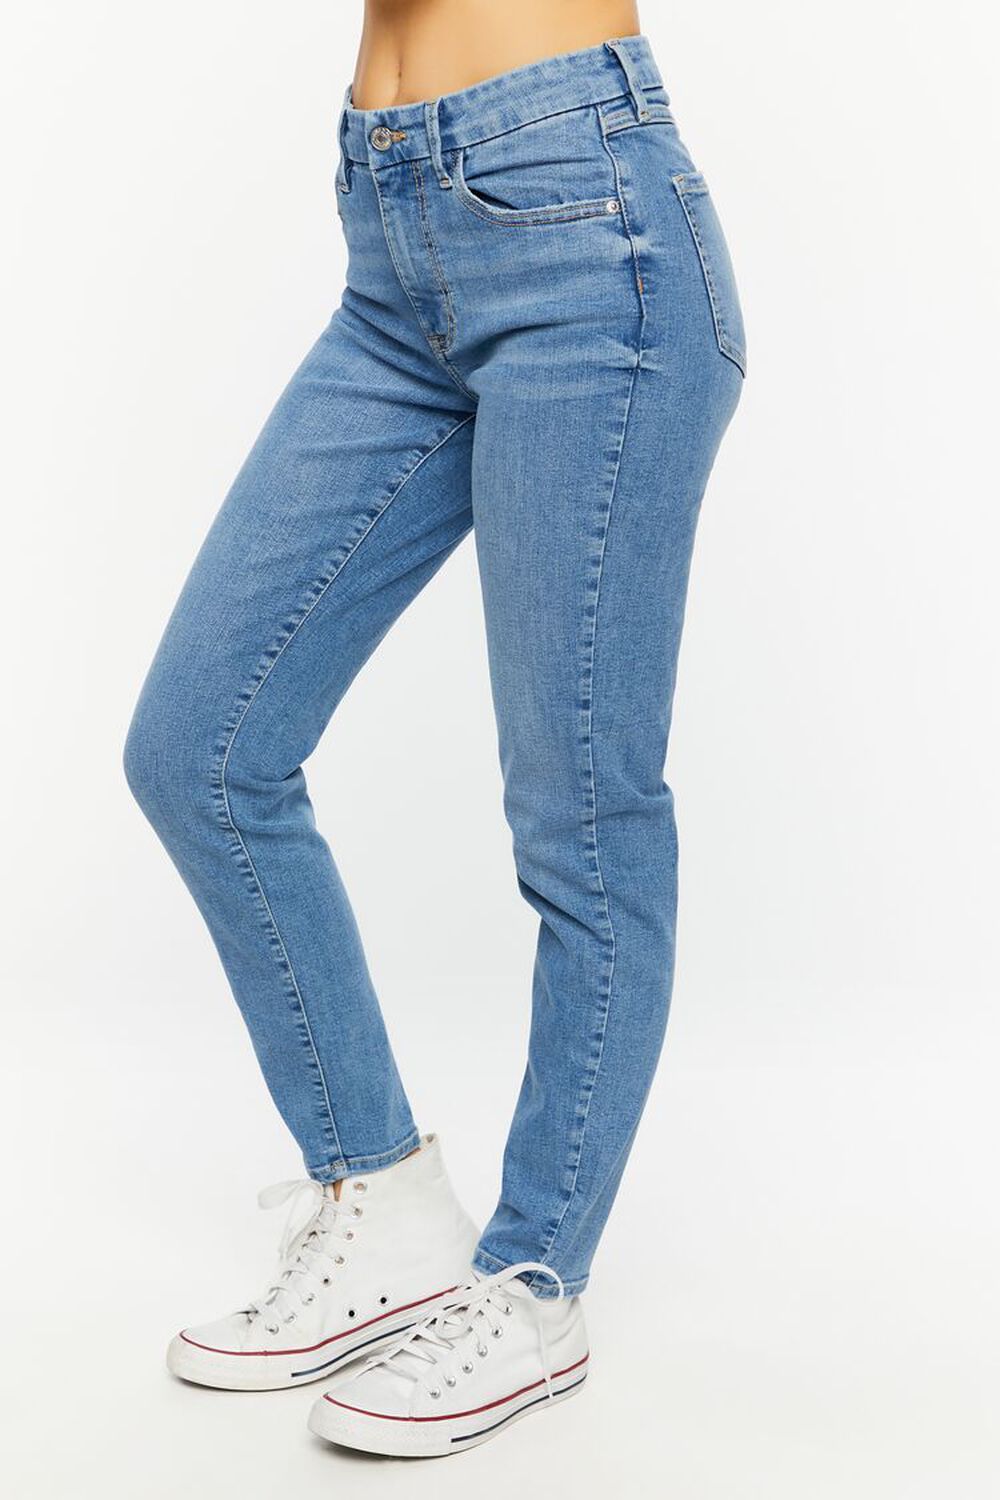 MEDIUM DENIM Recycled Cotton Mid-Rise Skinny Jeans, image 2